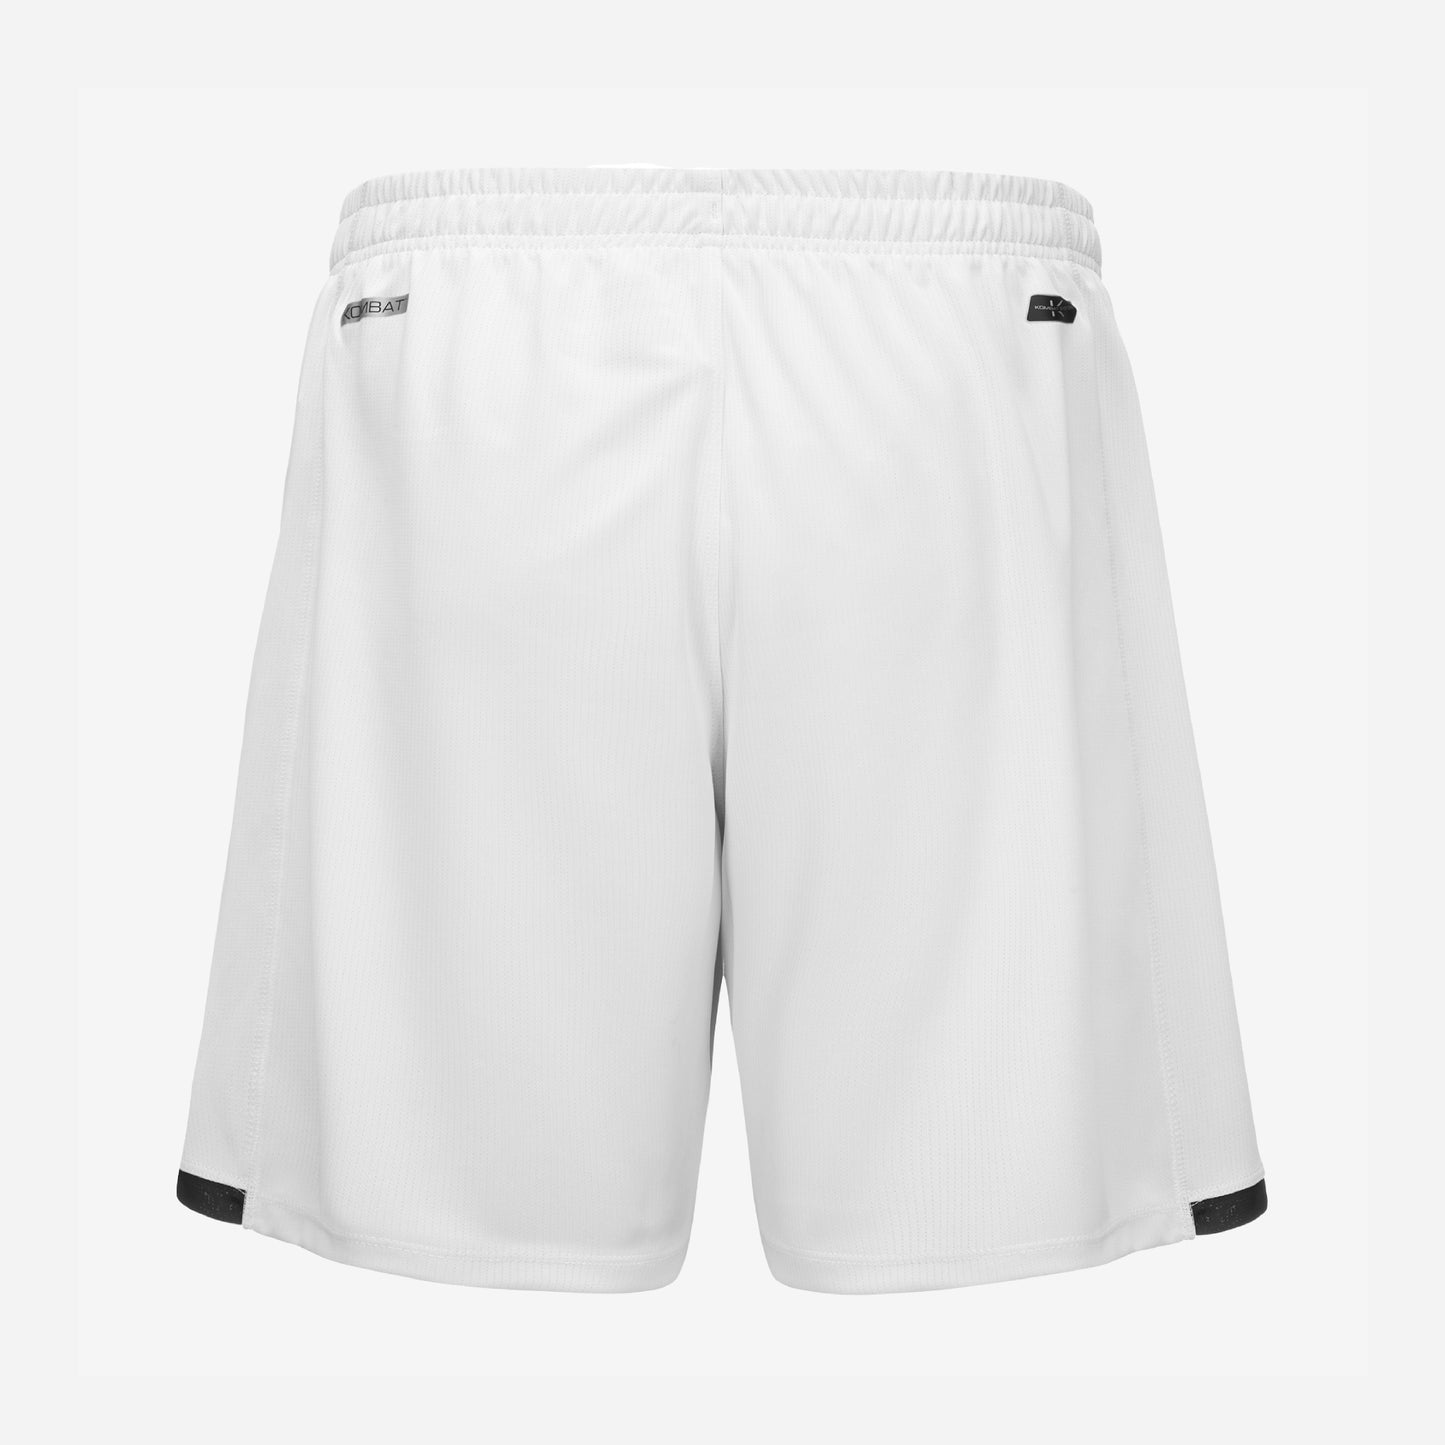 Home Match Shorts 23/24 - White